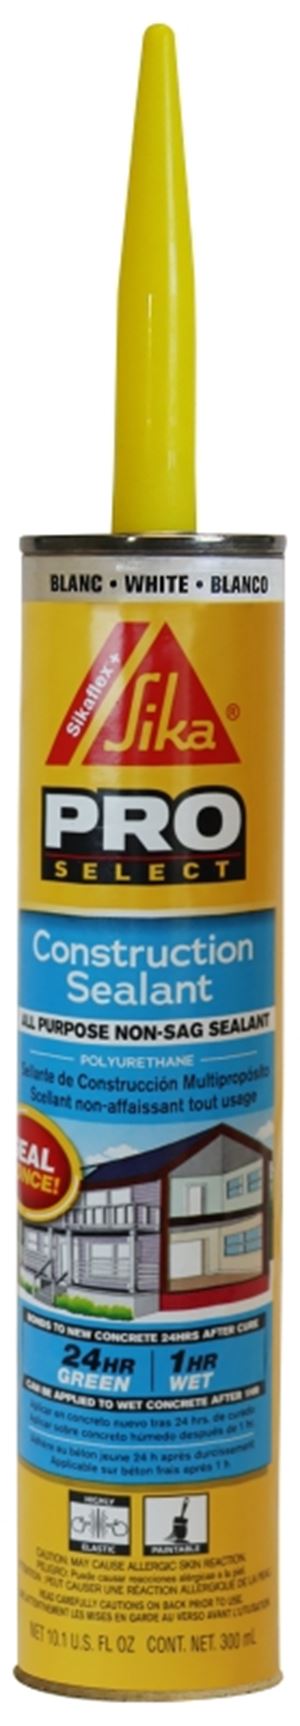 SIKA SIKAFLEX PRO SELECT Series 515309 Construction Sealant, White, 10.1 oz, Cartridge